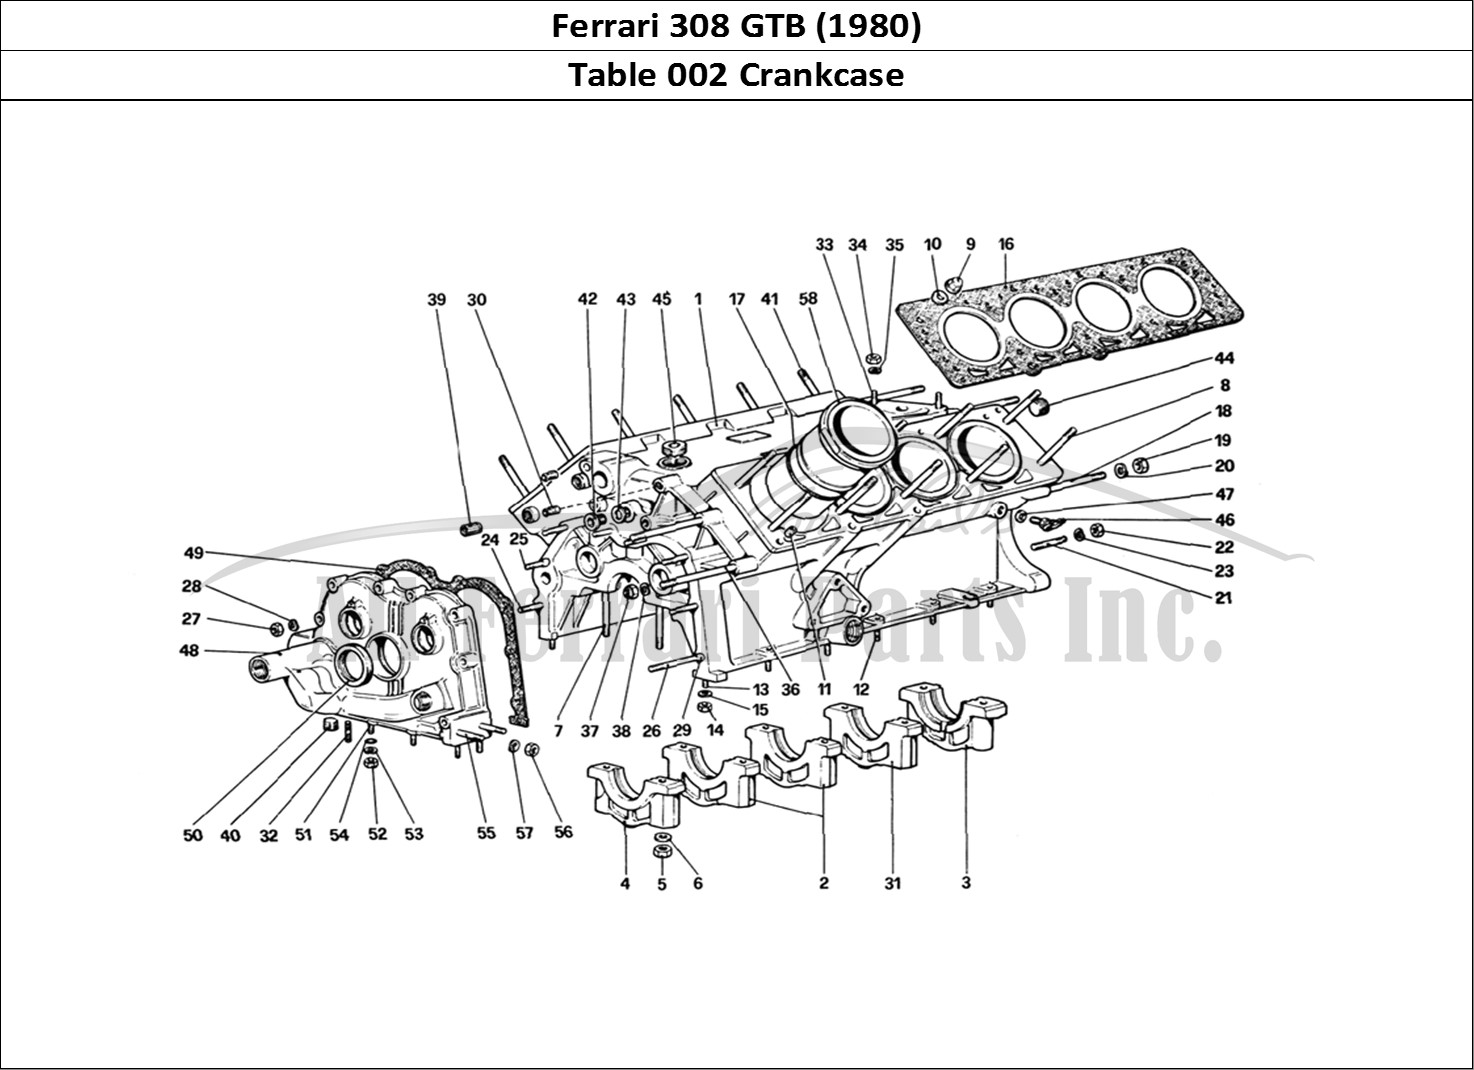 Ferrari Parts Ferrari 308 GTB (1980) Page 002 Crankcase